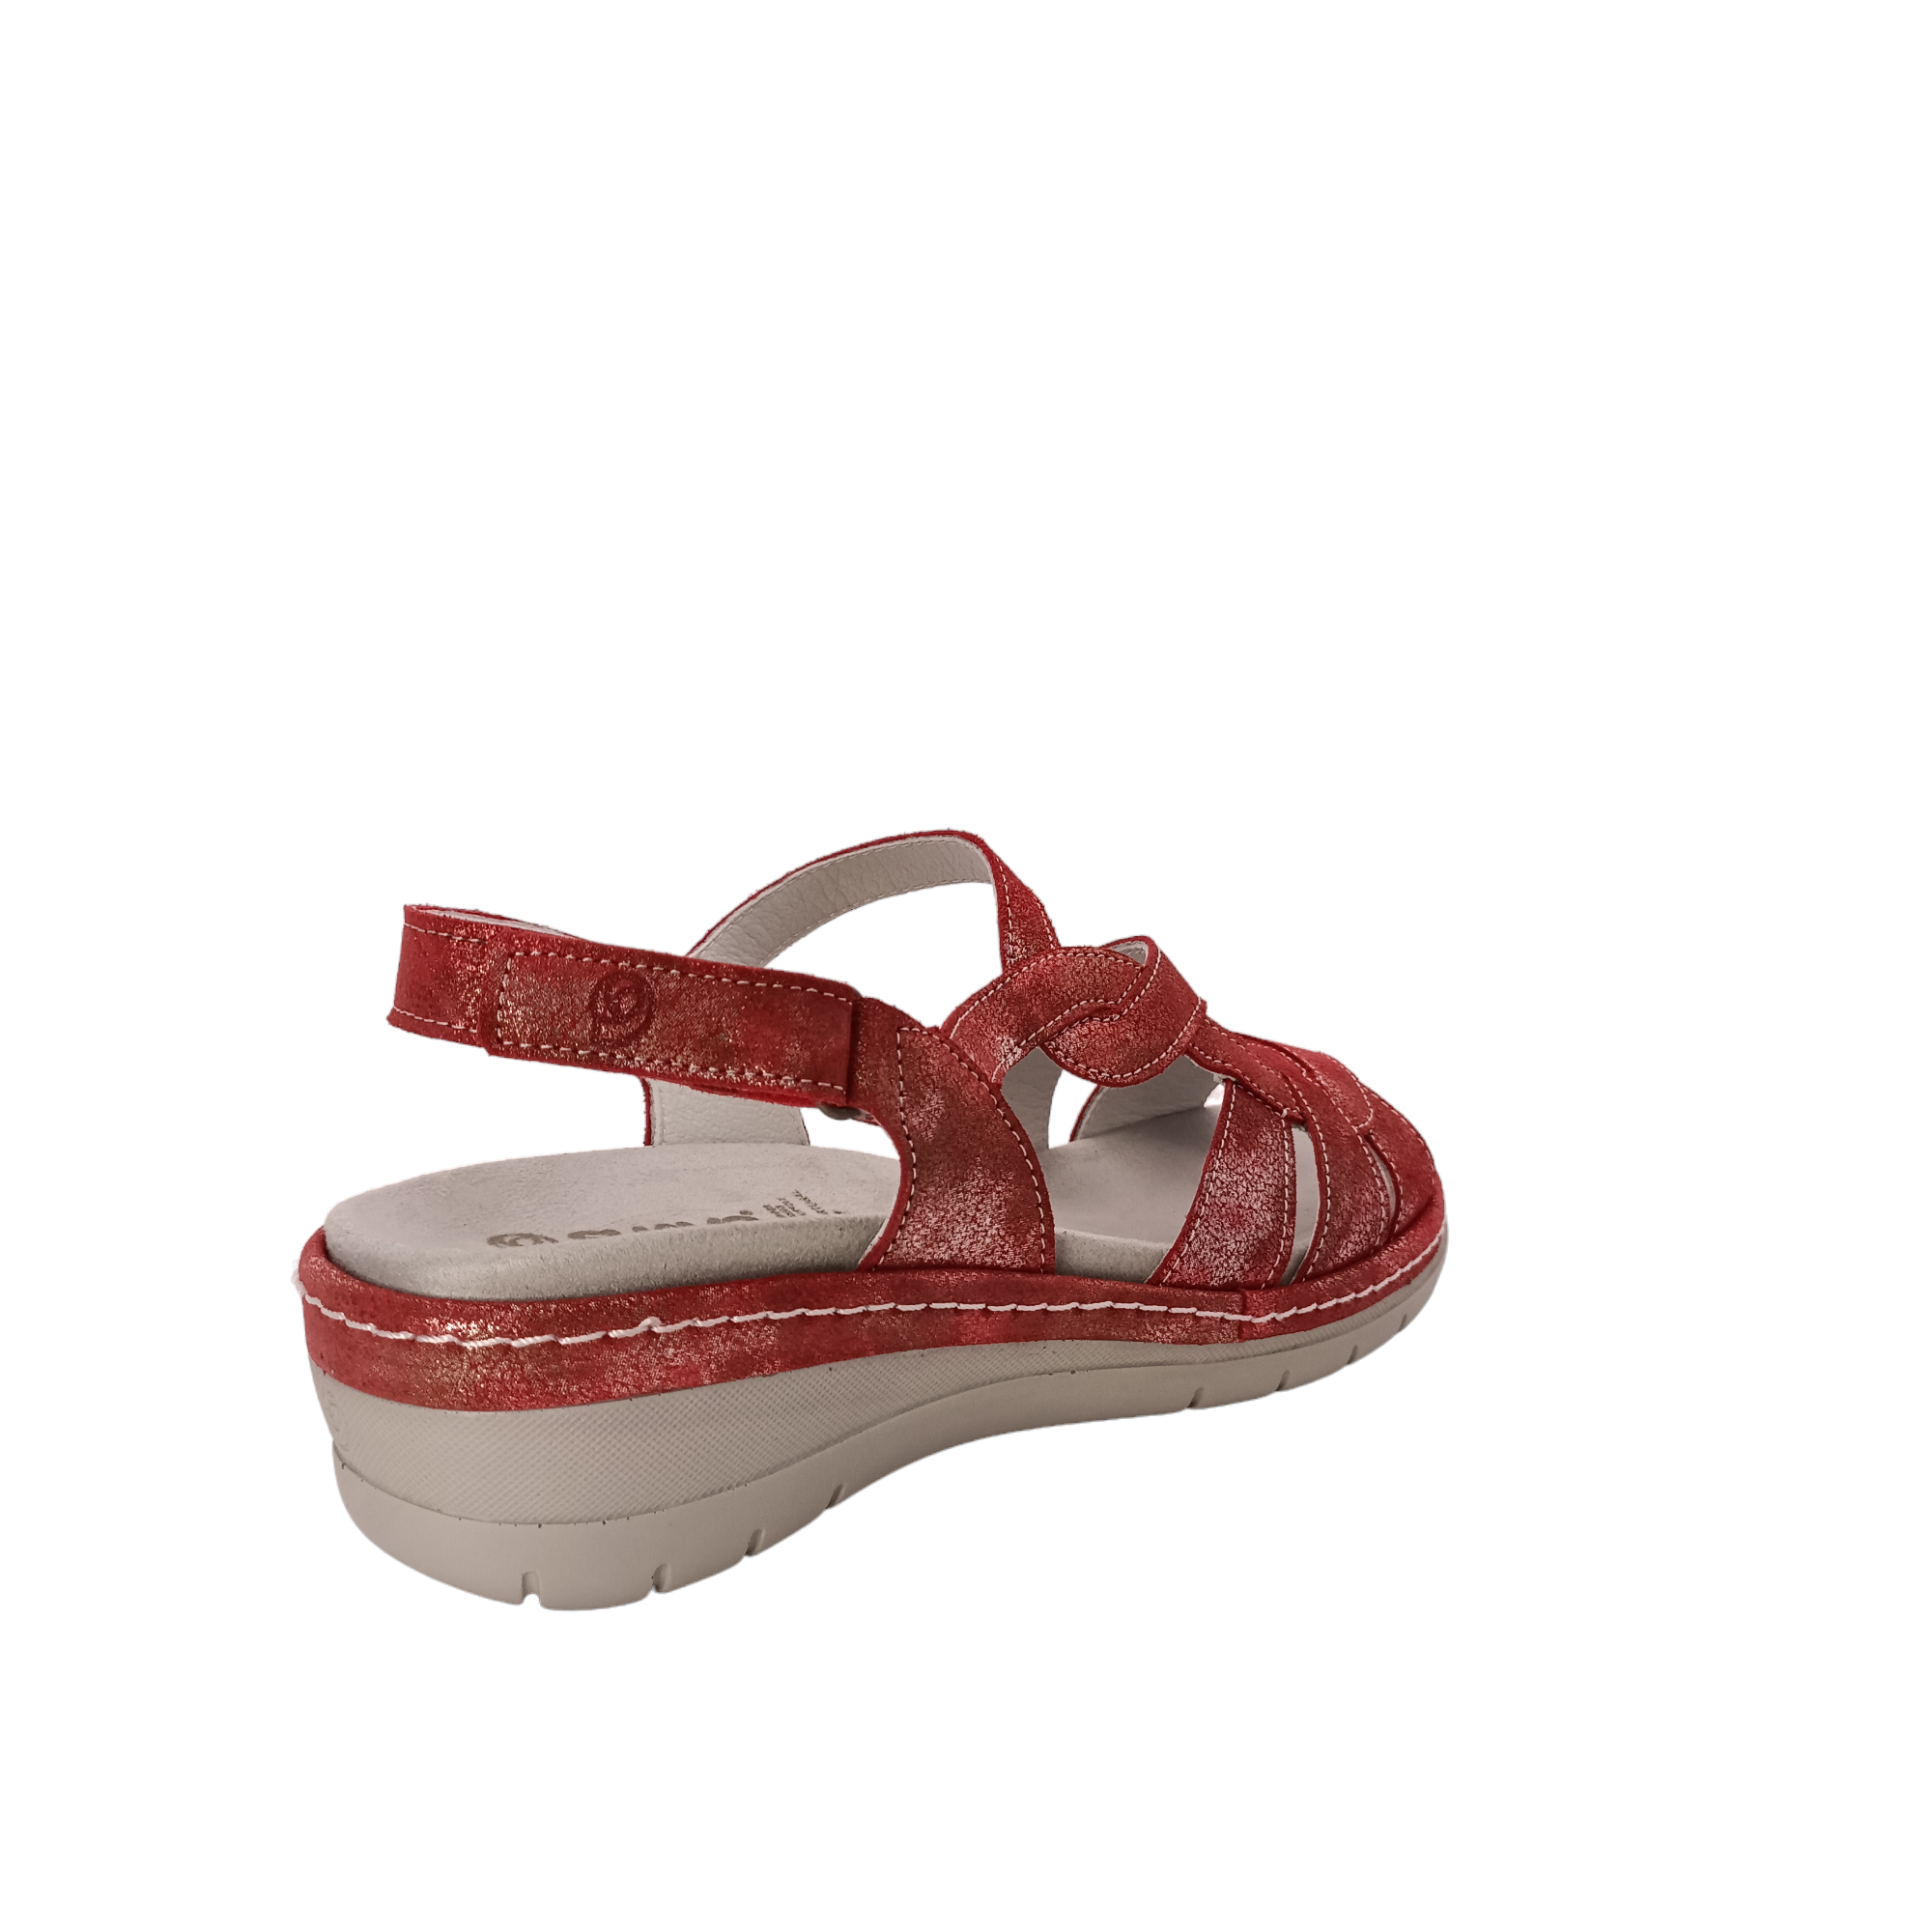 Elisa - shoe&me - Suave - Sandal - Sandals, Summer, Womens